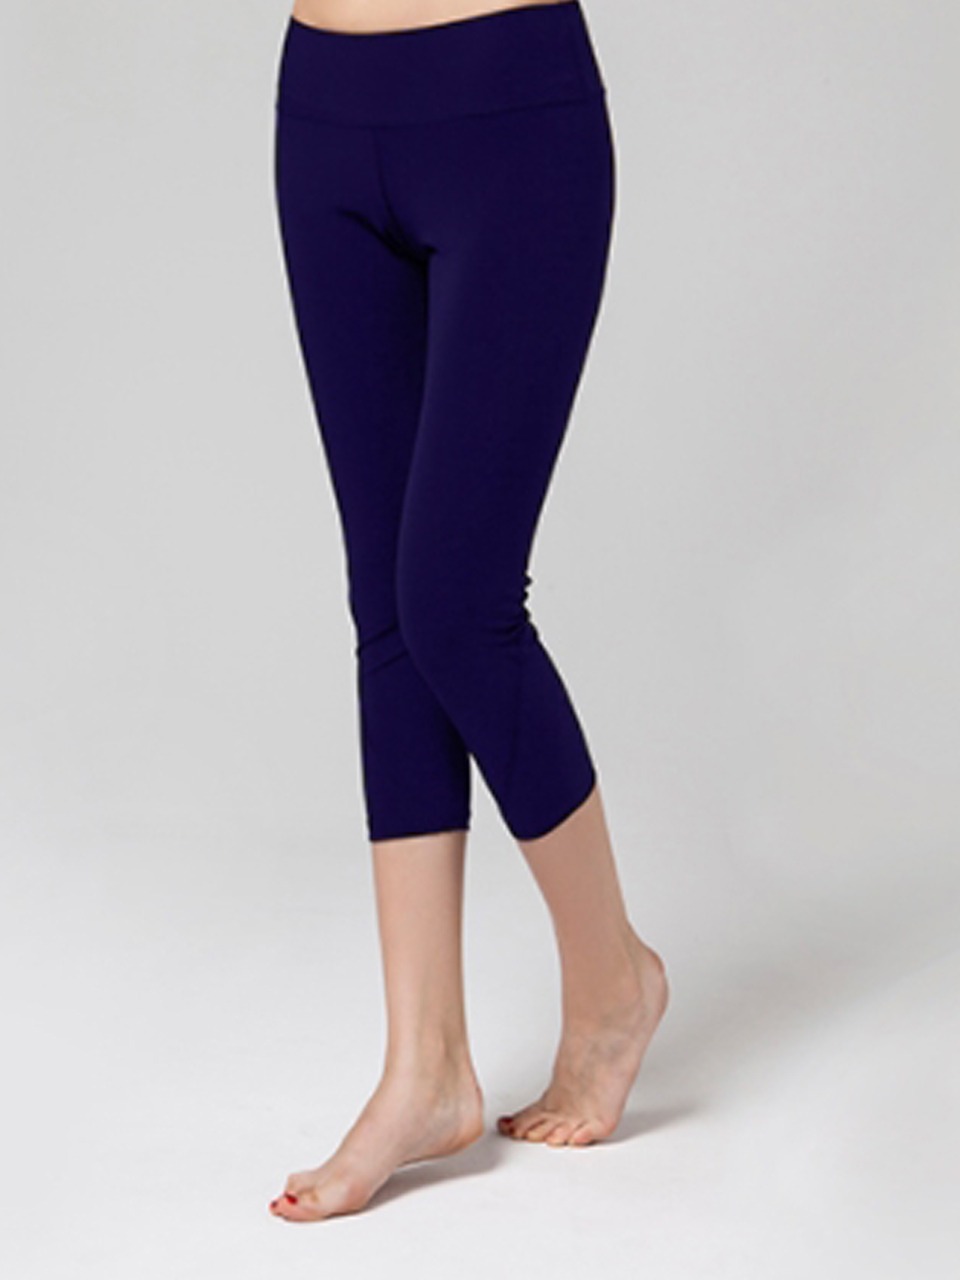 Eurojersey Sclupt Yoga Pants- Purple유로저지 슬림라인 요가팬츠 - 퍼플